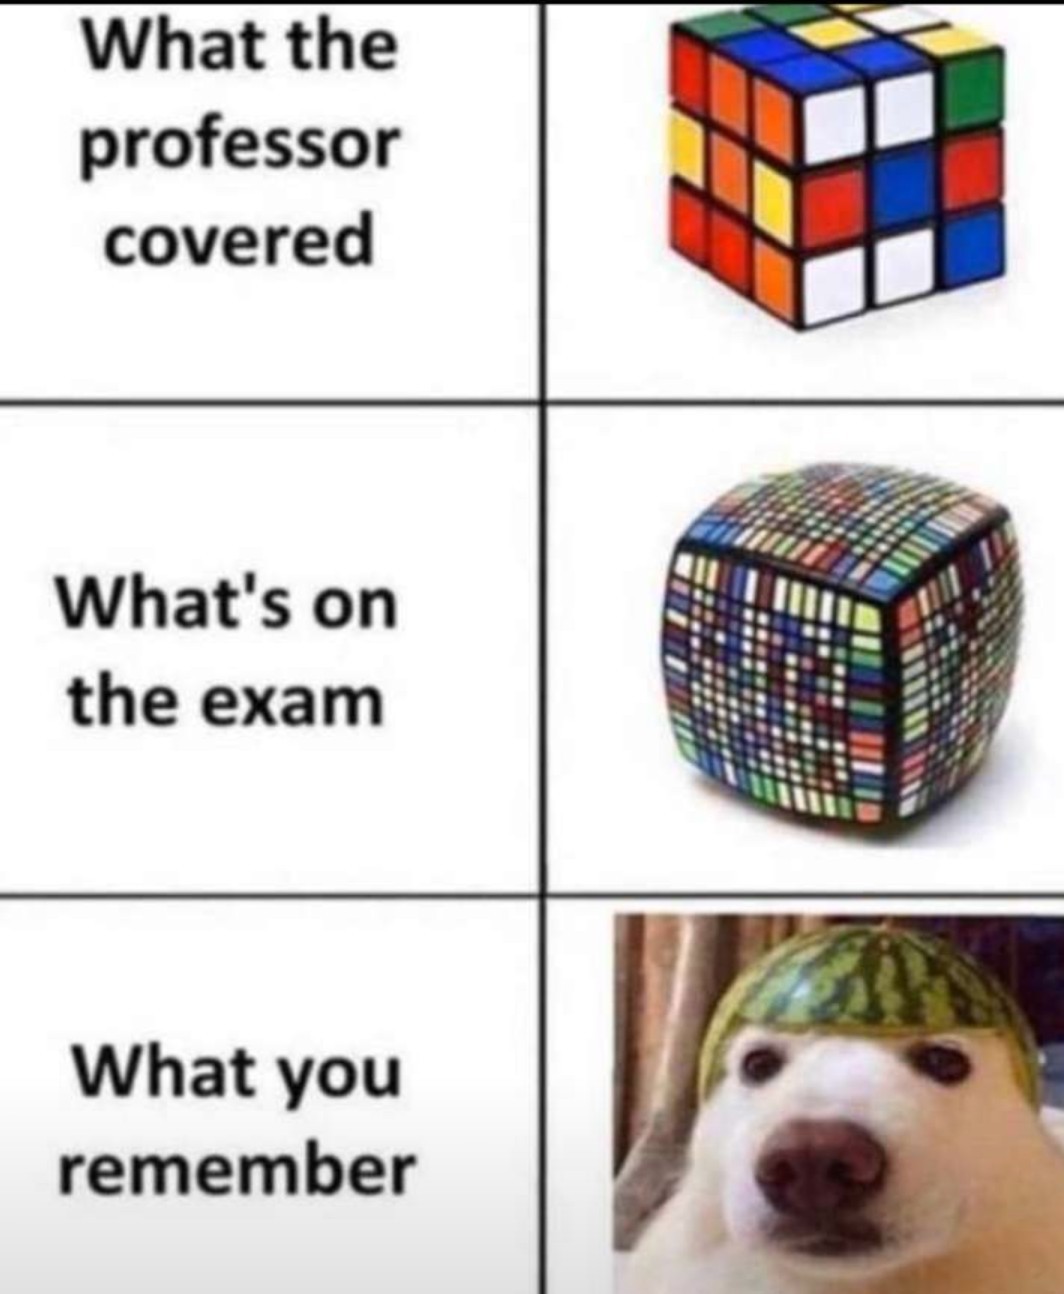 Exams - meme